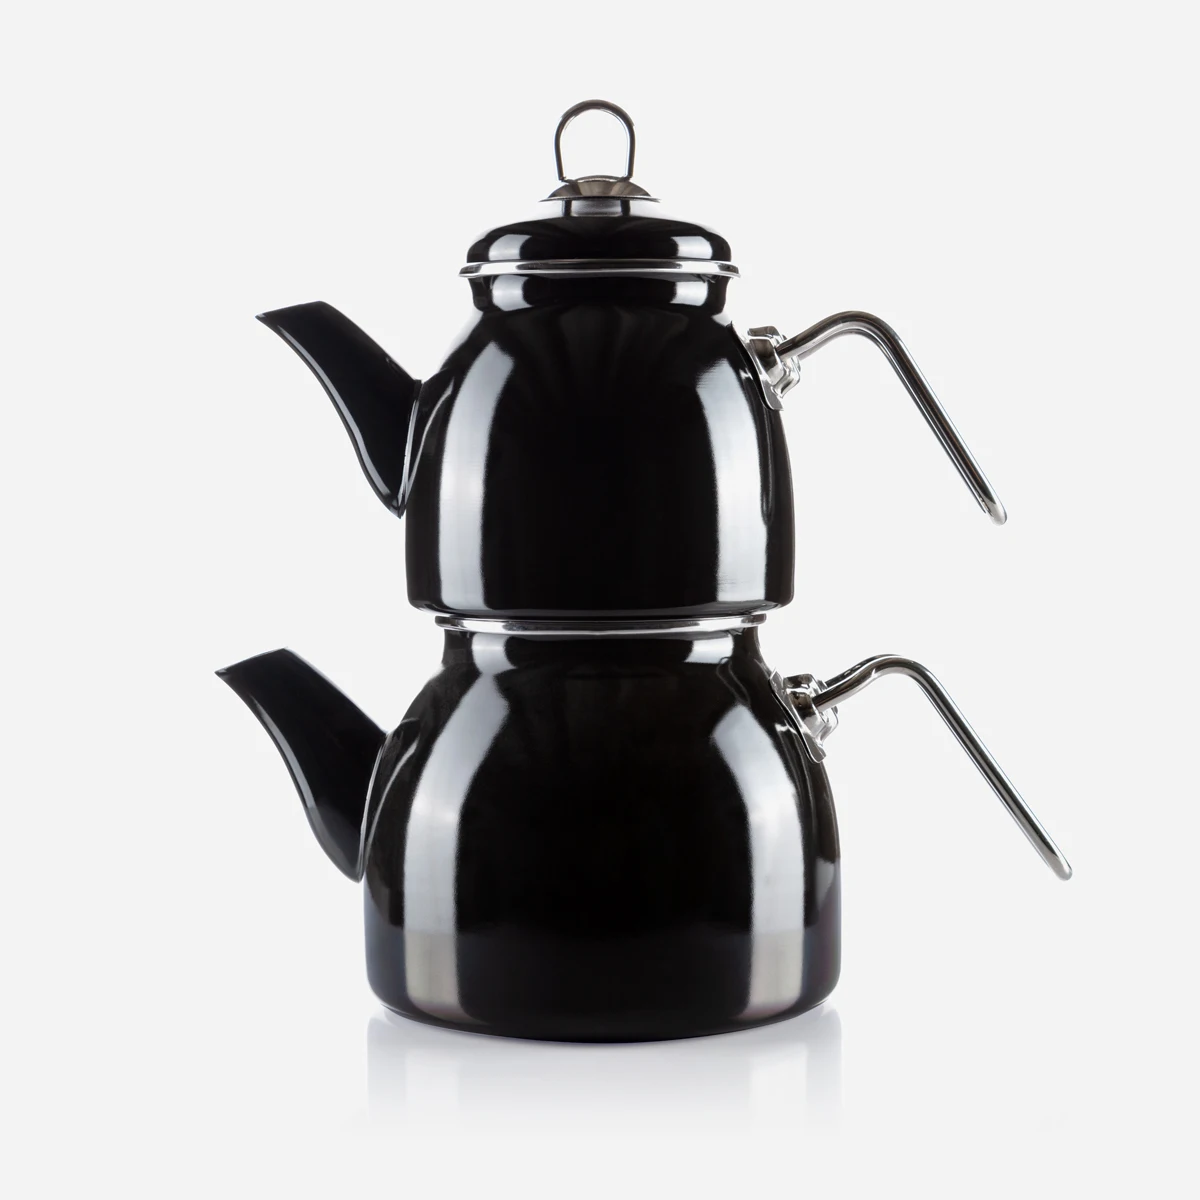 Large Enamel Black Tea Pot Kettle Heat Resistant Coffee Teaware Tableware Cup Mug Valentine Day Gift for Kitchen Accessories